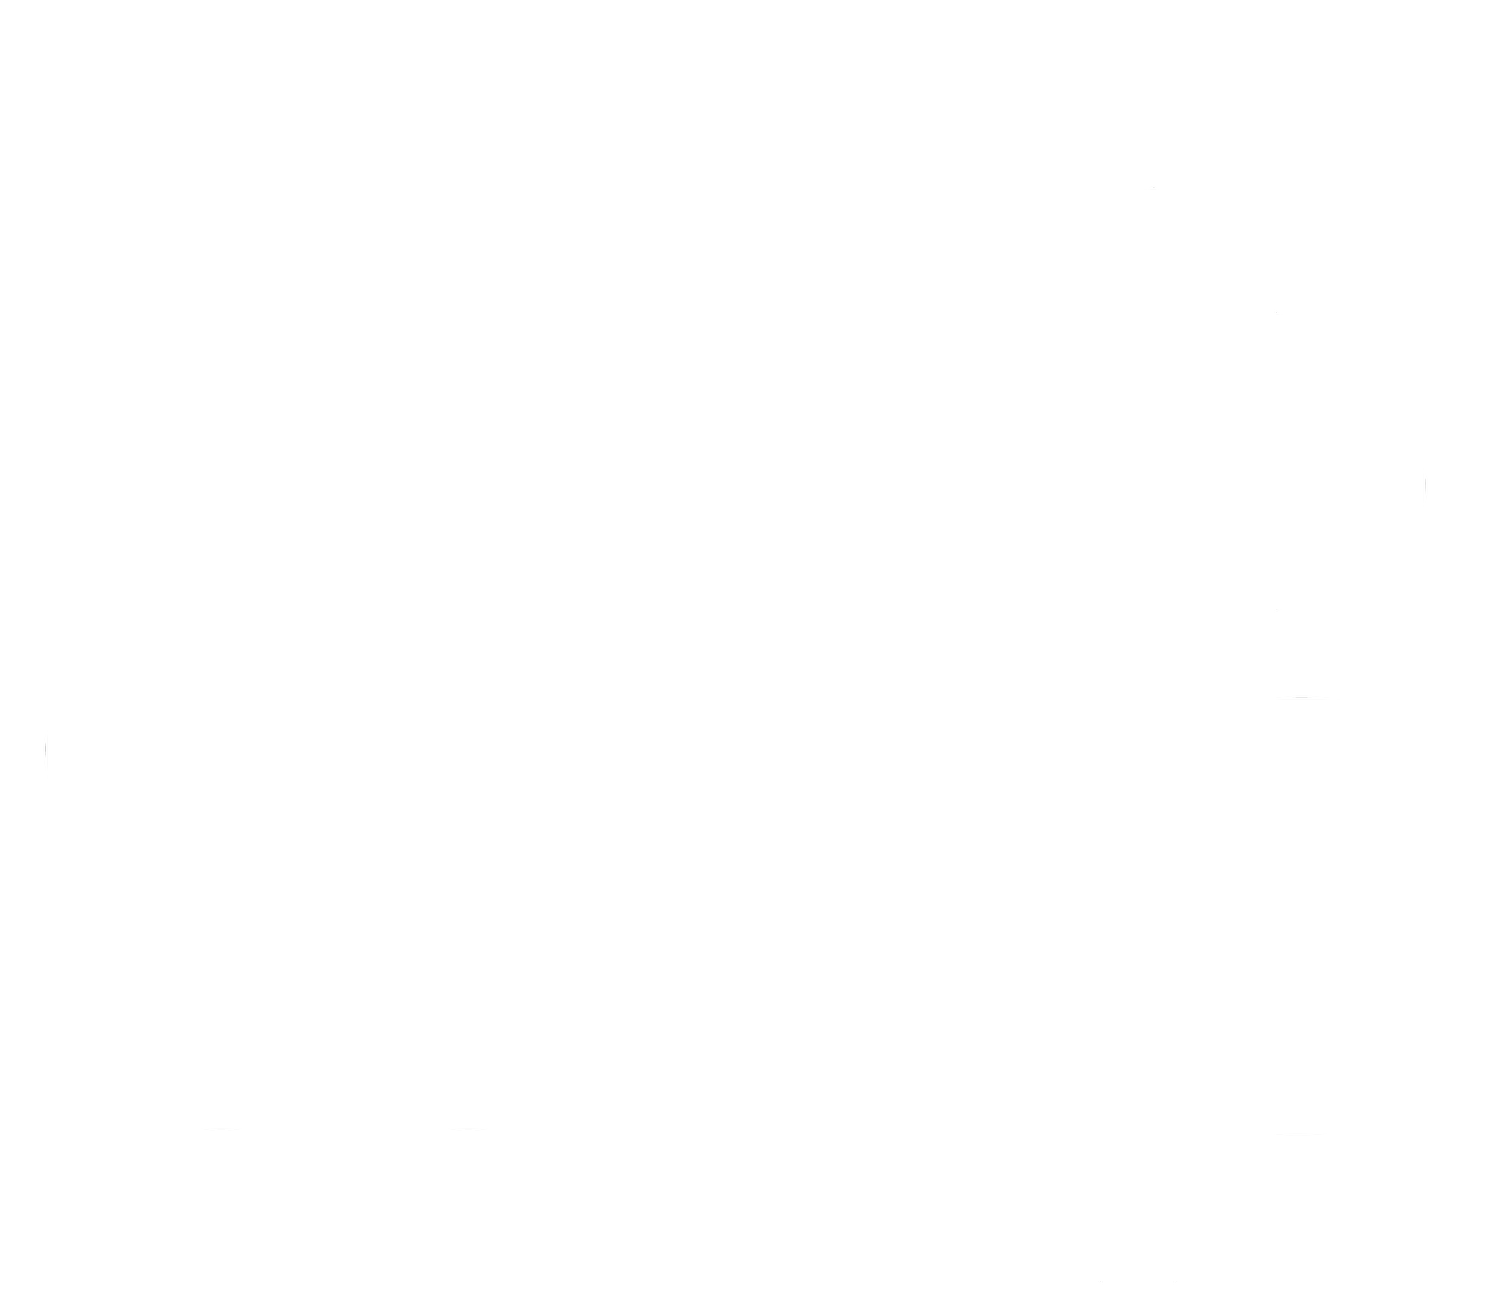 (c) Wep.com